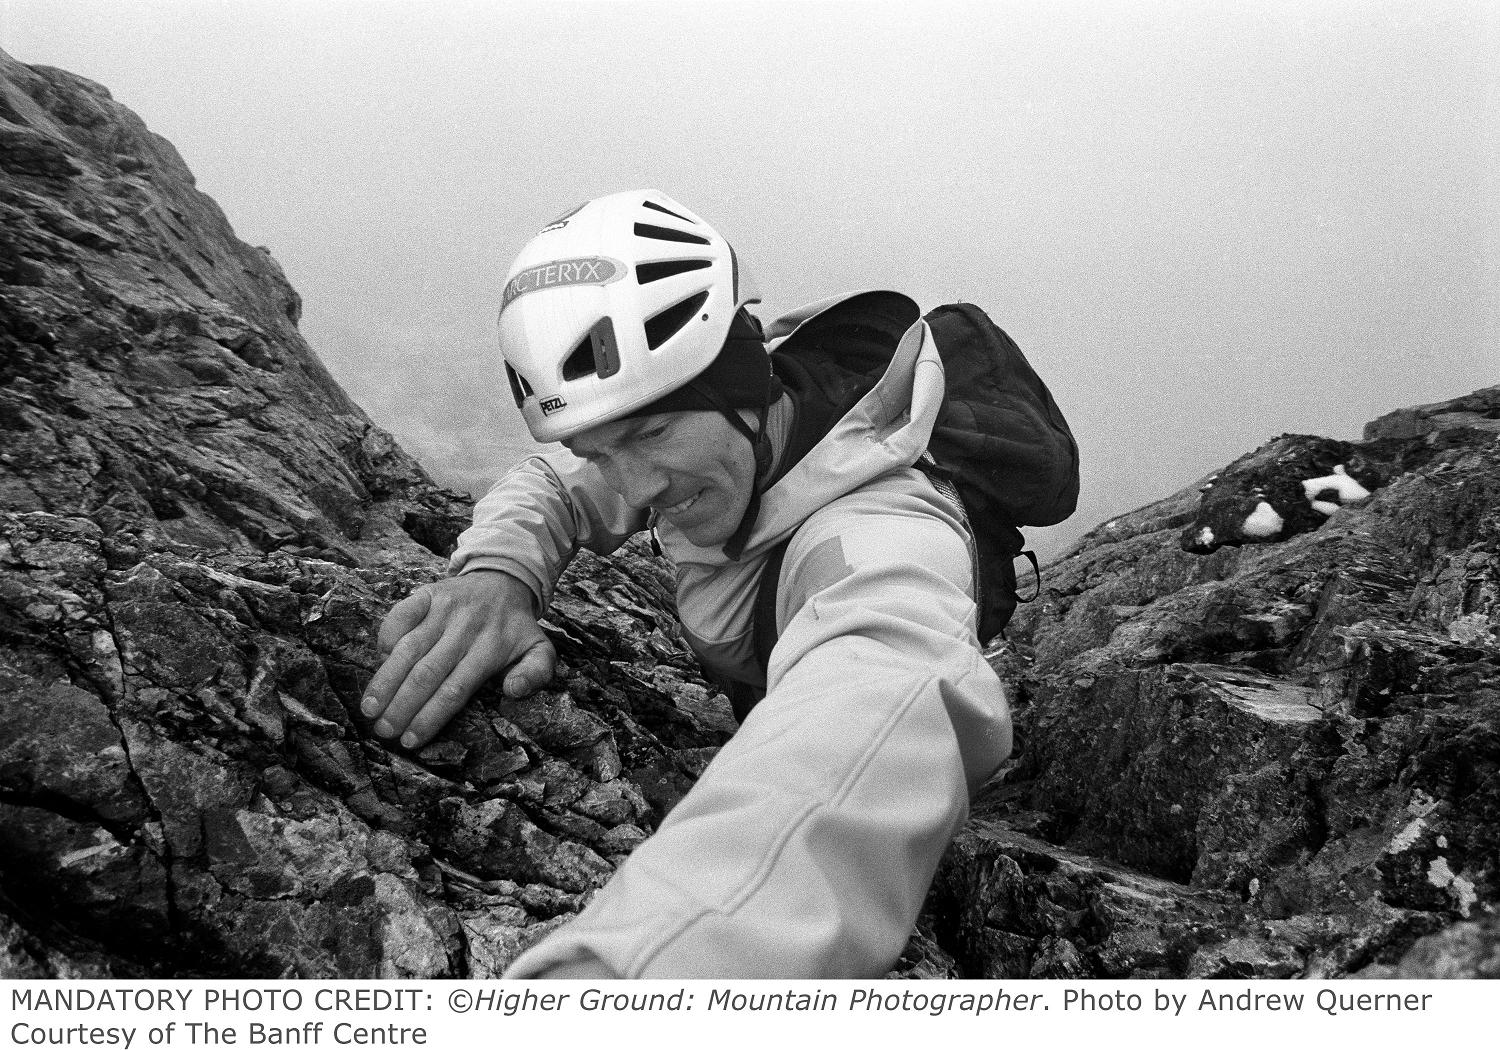 Higher Ground:Mountain Photographer